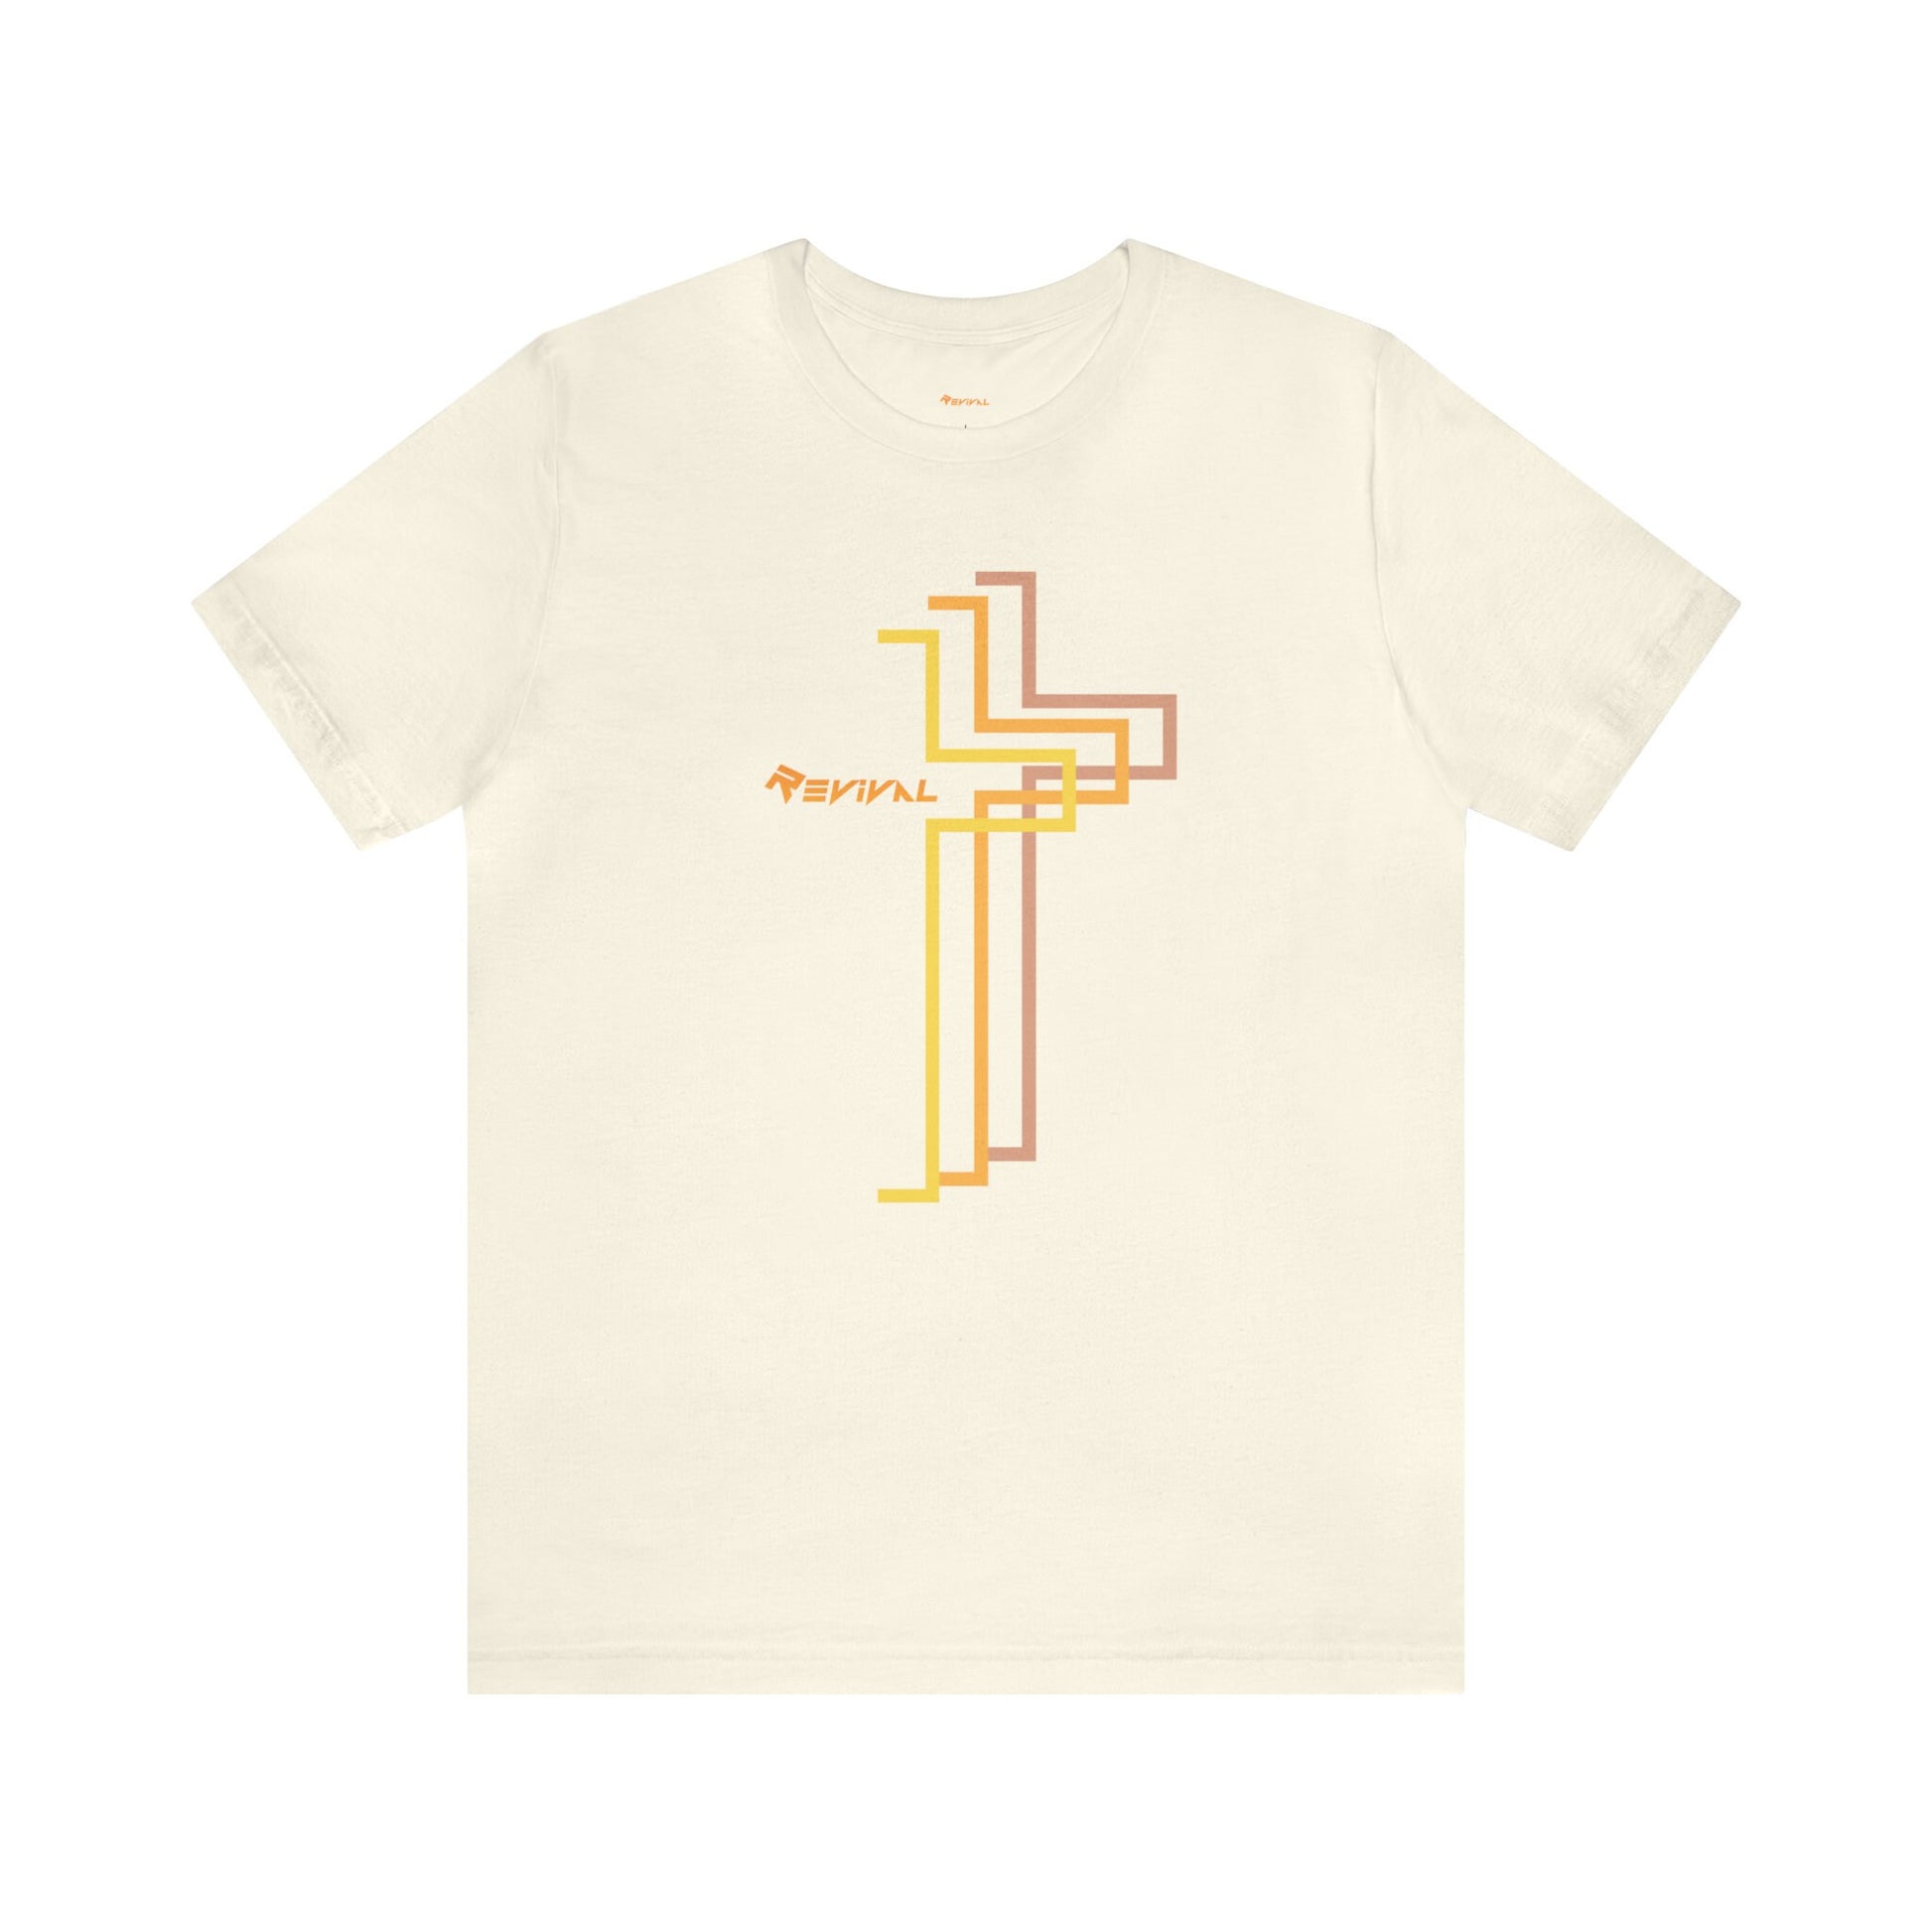 Calvary Pumpkin Spice T-Shirt by Revival Short Sleeve Tee, Men's and Women's T-Shirt